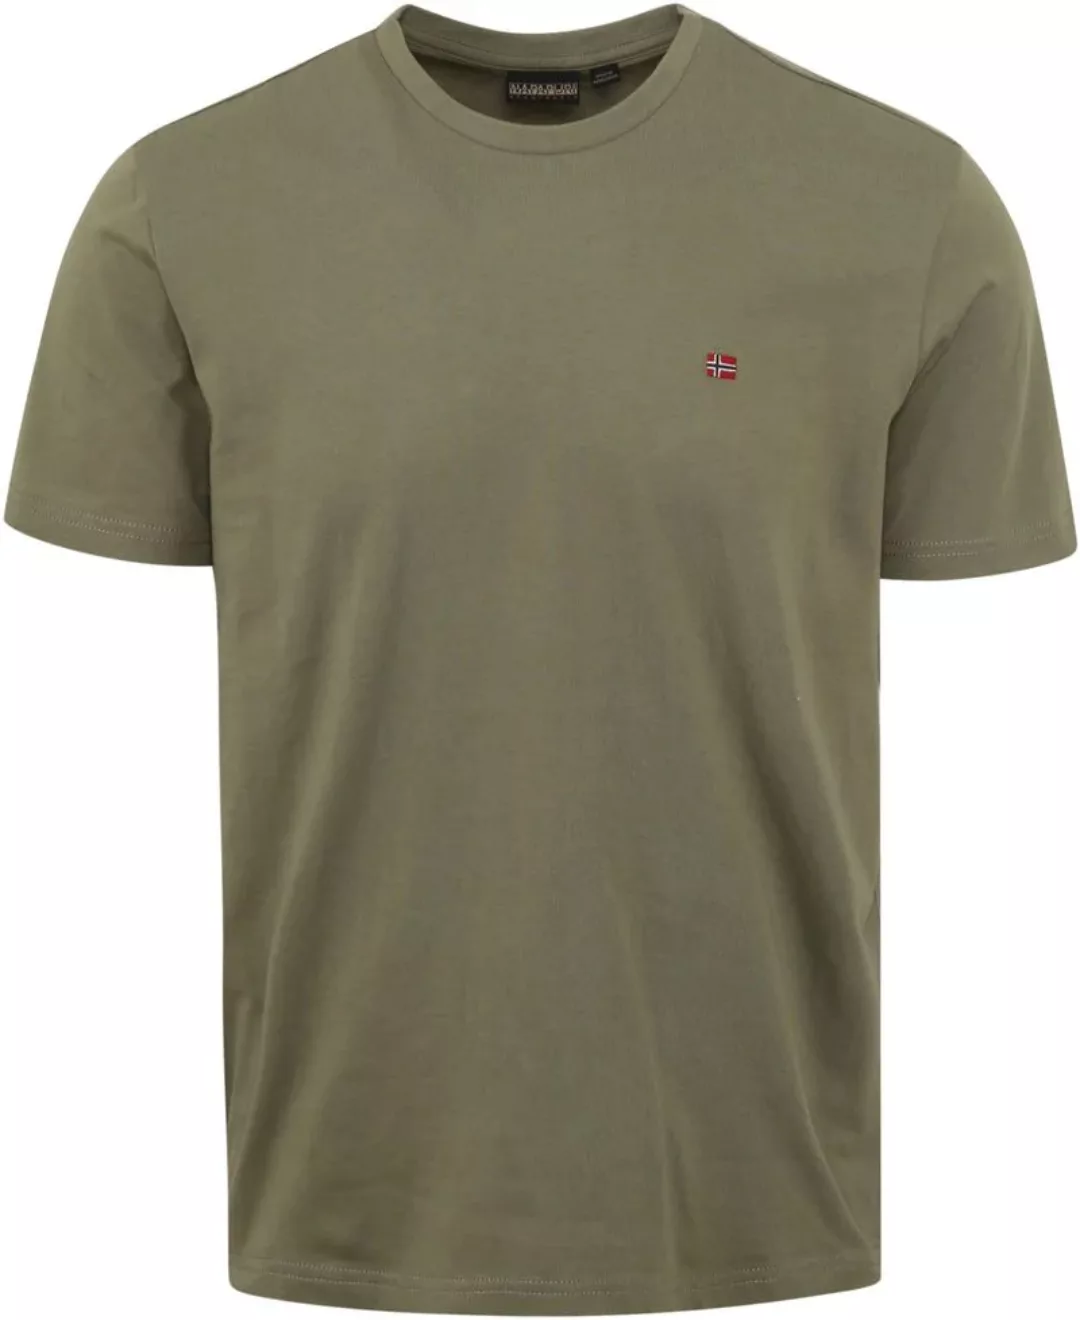 Napapijri Salis T-shirt Grün - Größe L günstig online kaufen